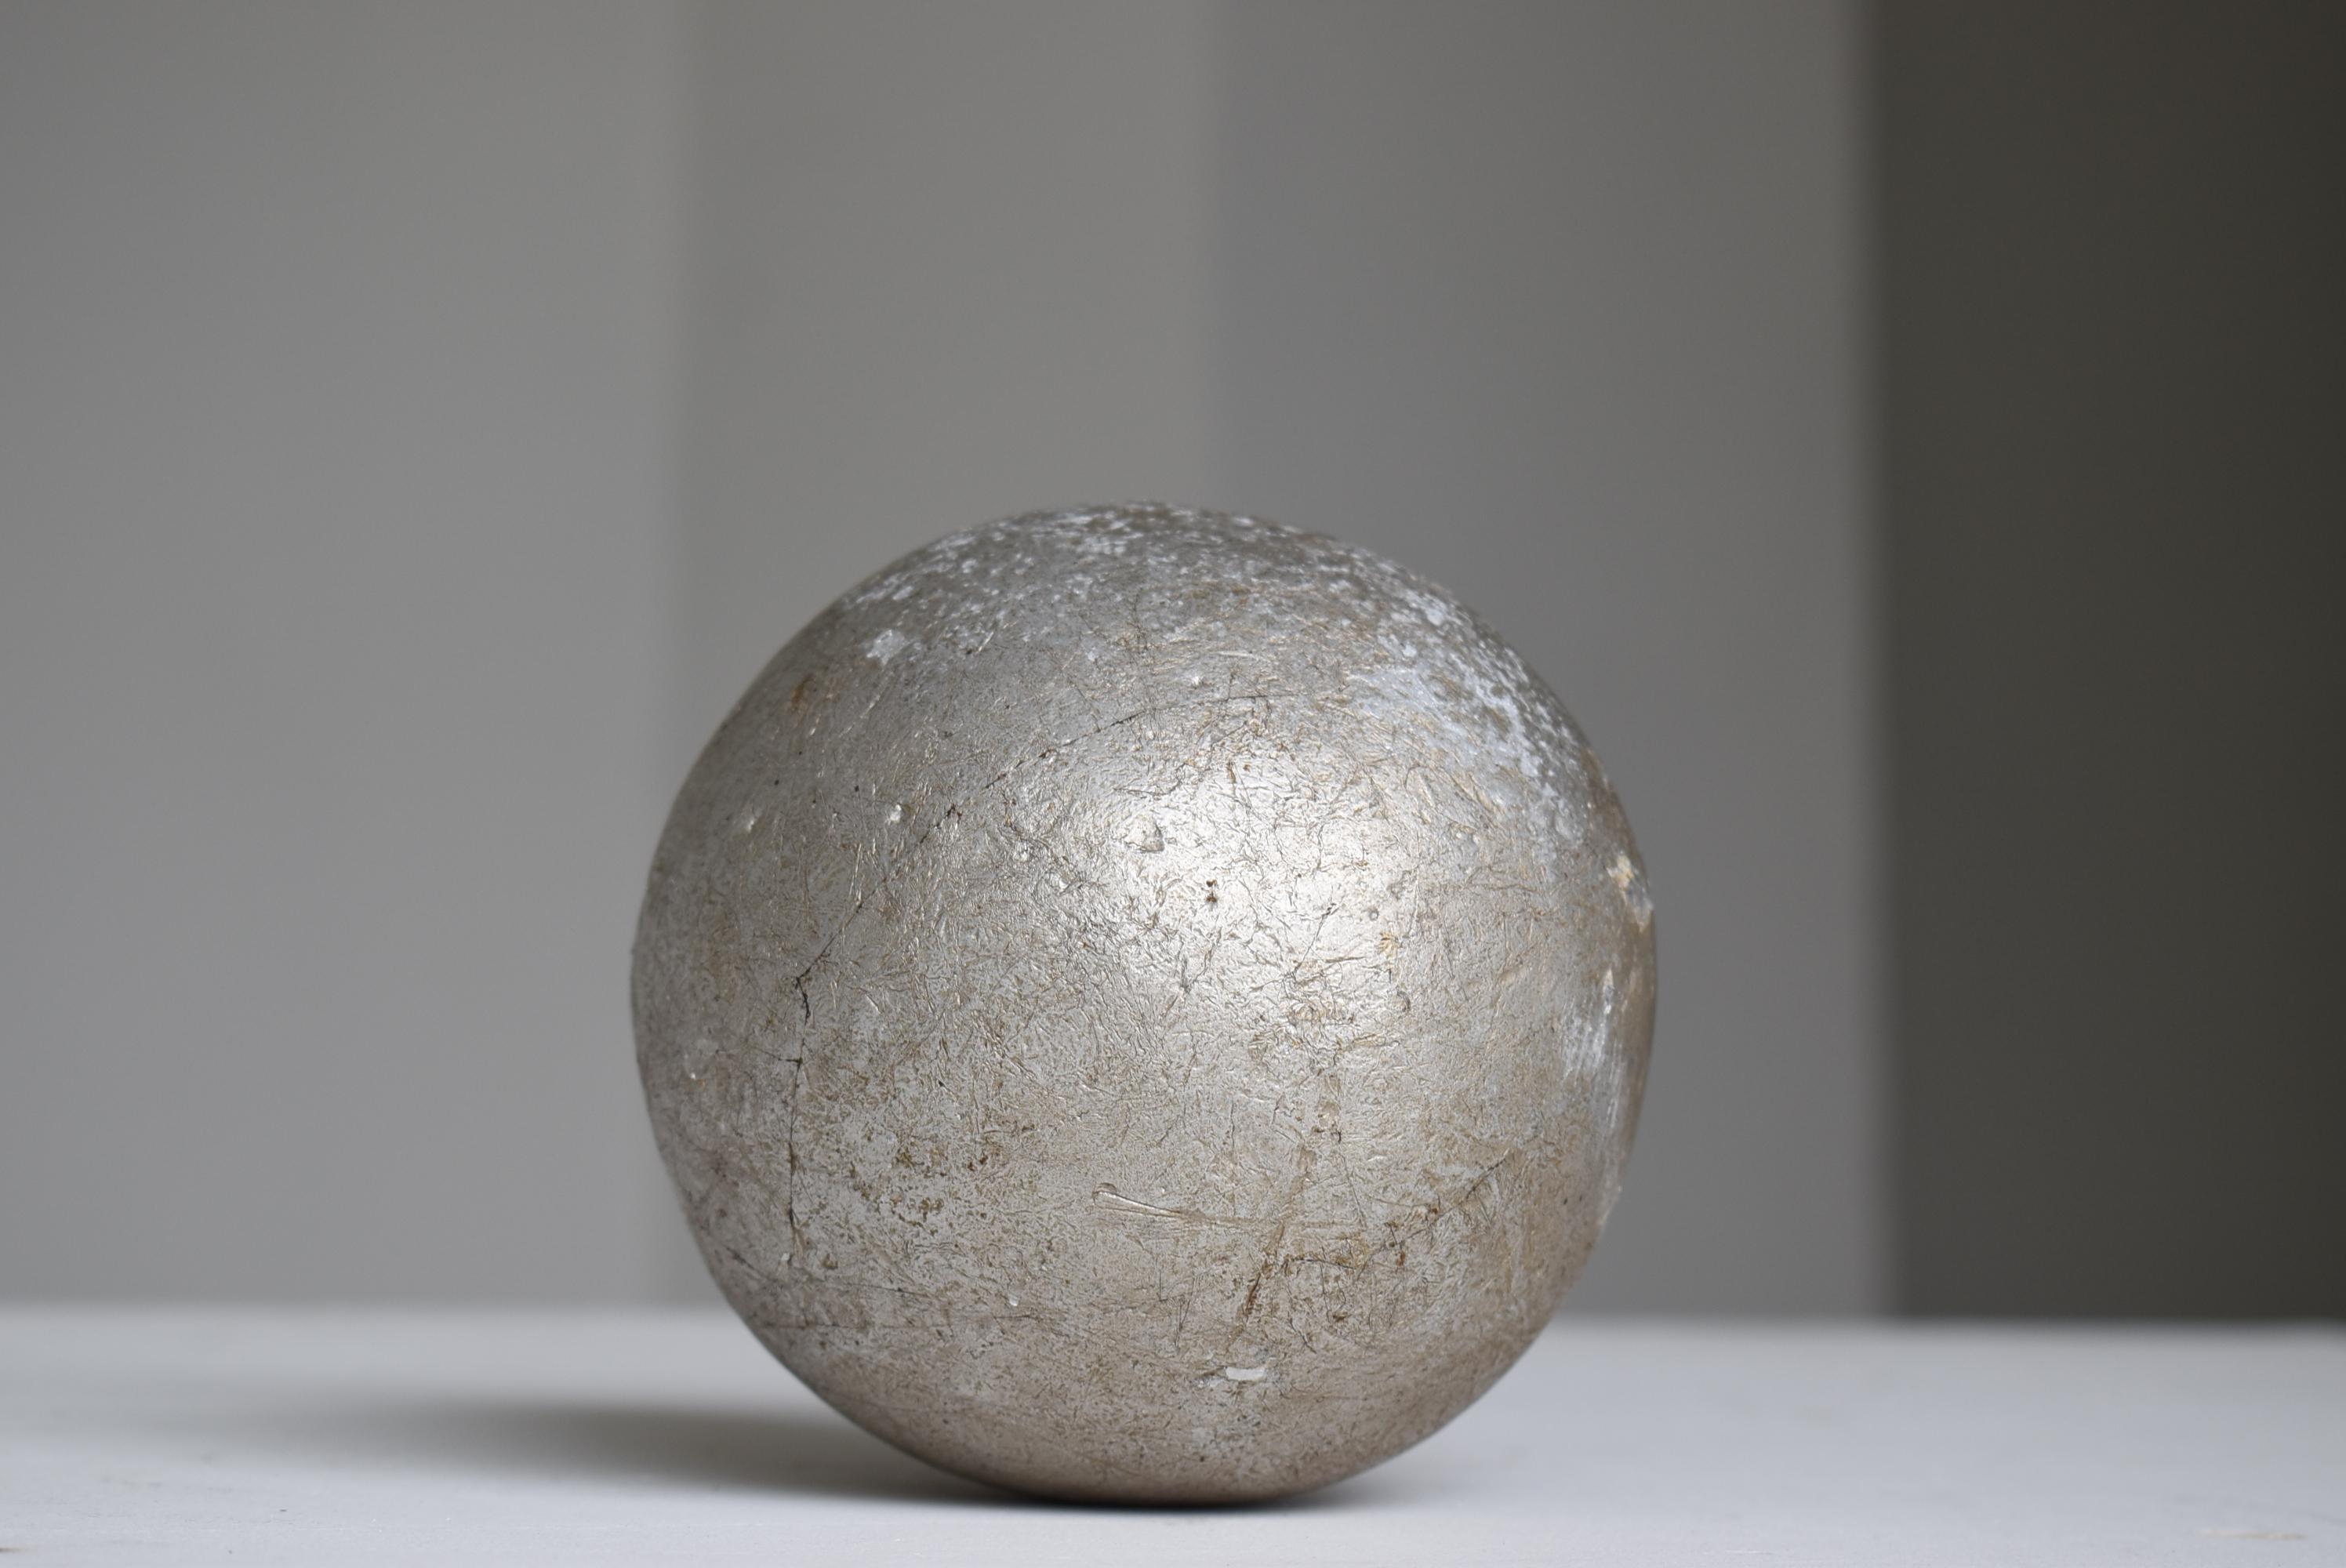 Showa Japanese Old Aluminum Ball 1920s-1950s/Antique Object Figurine Wabisabi Art